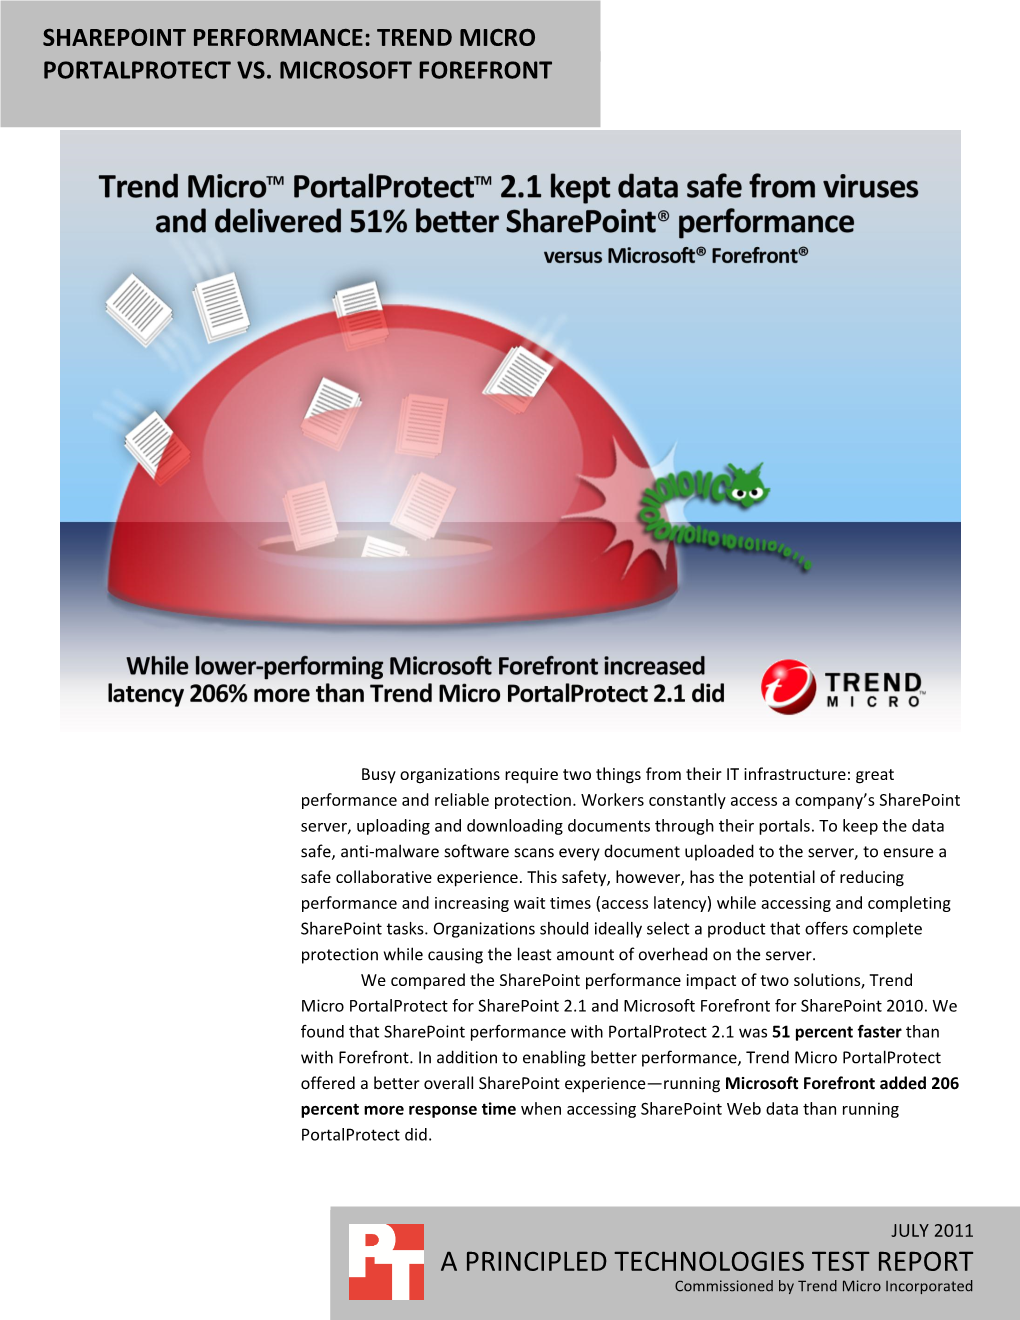 Sharepoint Performance: Trend Micro Portal Protect 2.1 Vs. Microsoft